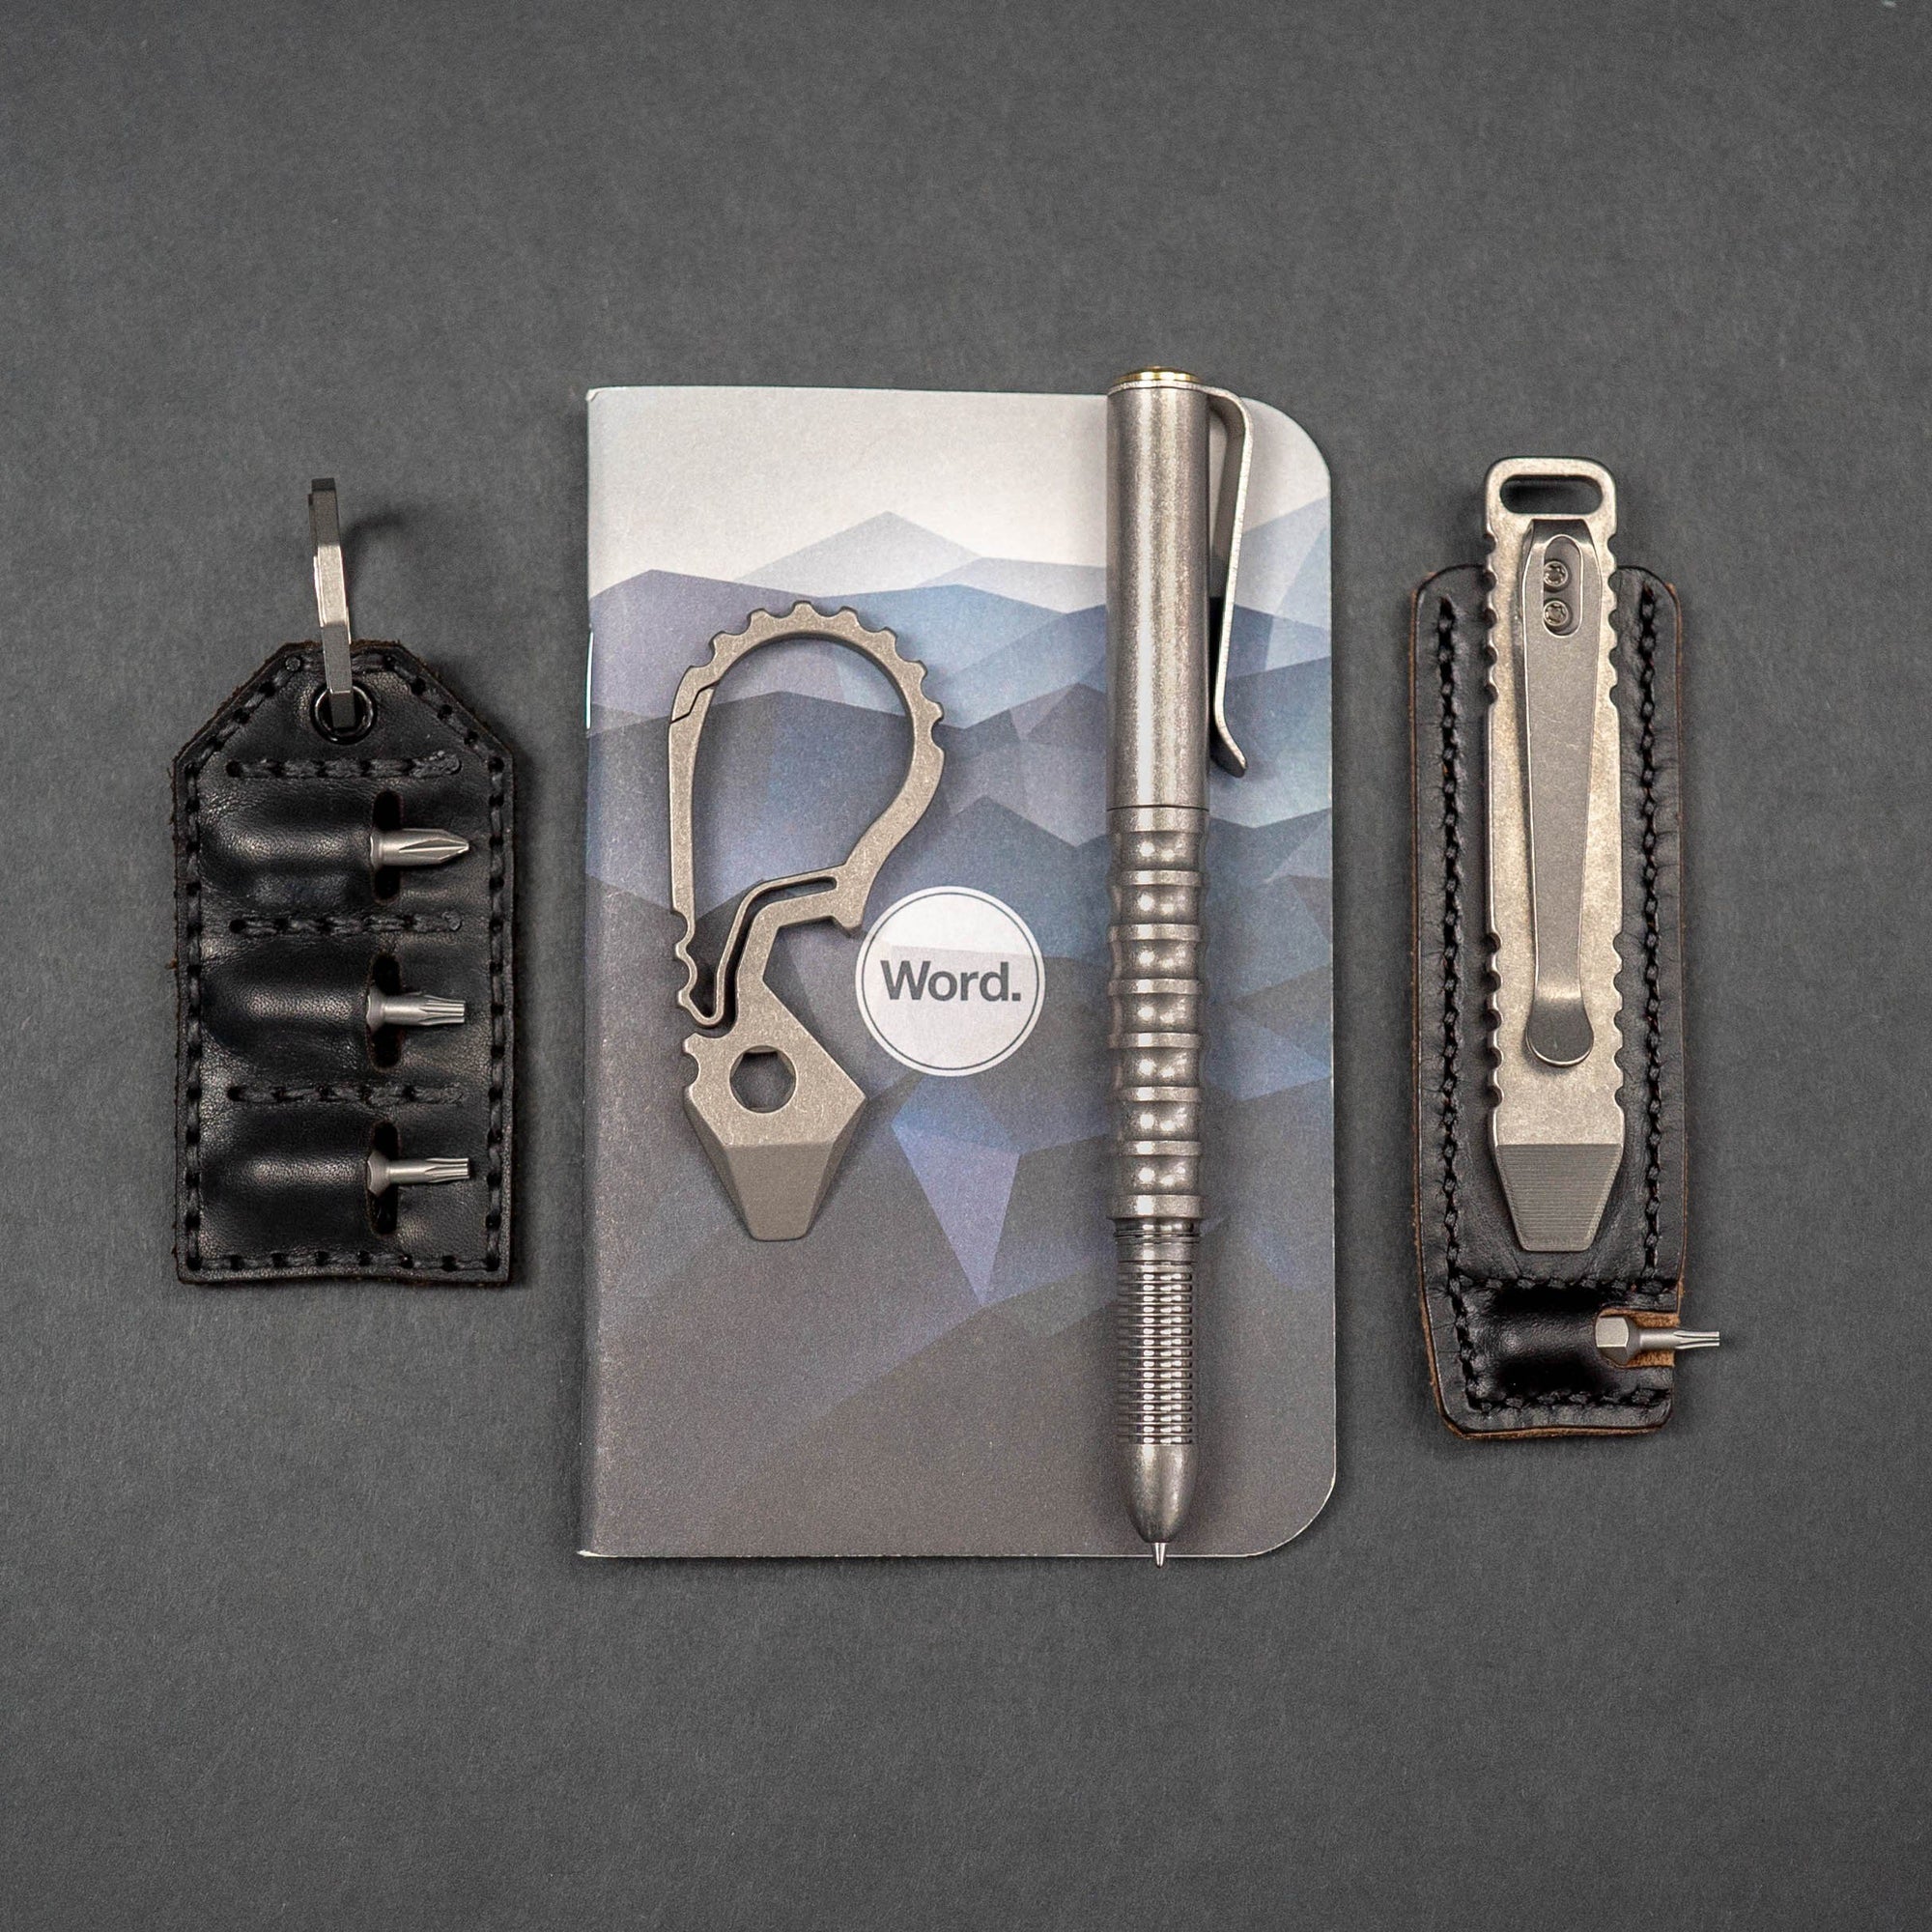 FEGVE Titanium keychain keychain key ring Carabiner Spring Hook Trigger Clip  | eBay